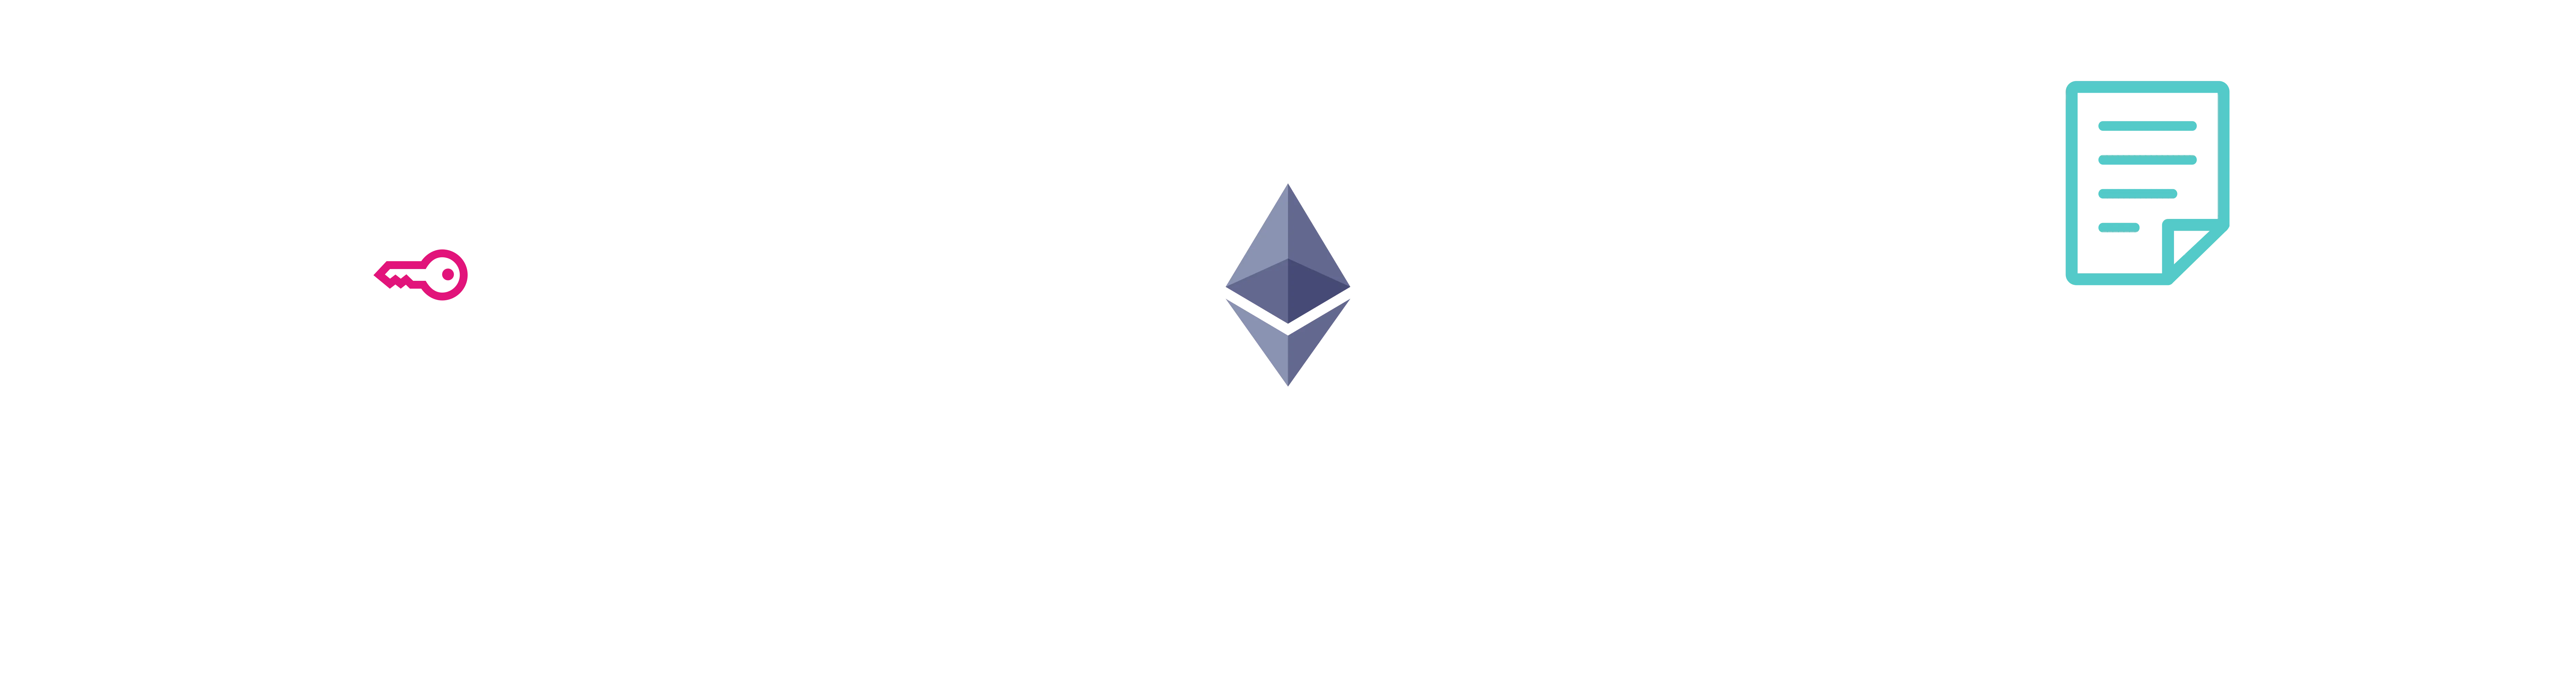 Ethereum balances diagram